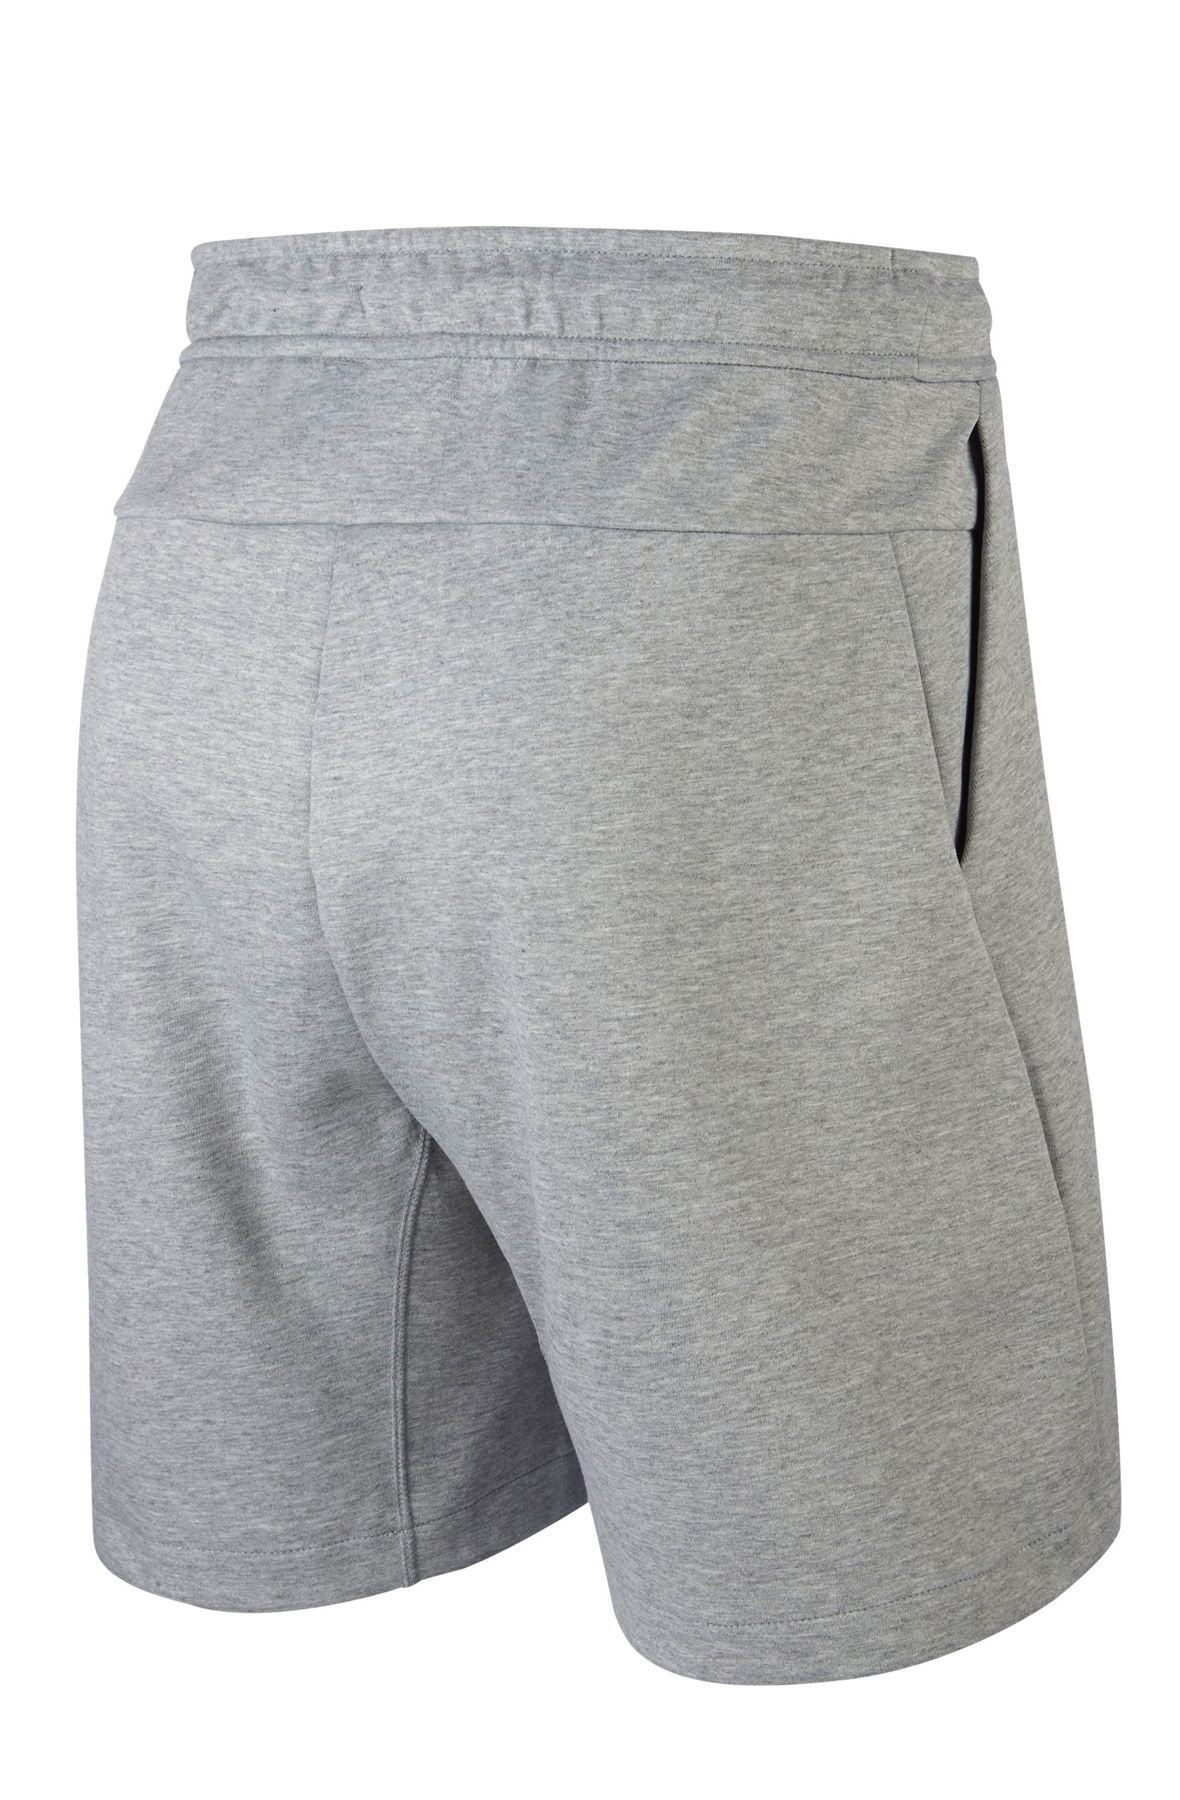 NIKE Sportswear Tech Fleece Shorts 928513 063 - Shiekh